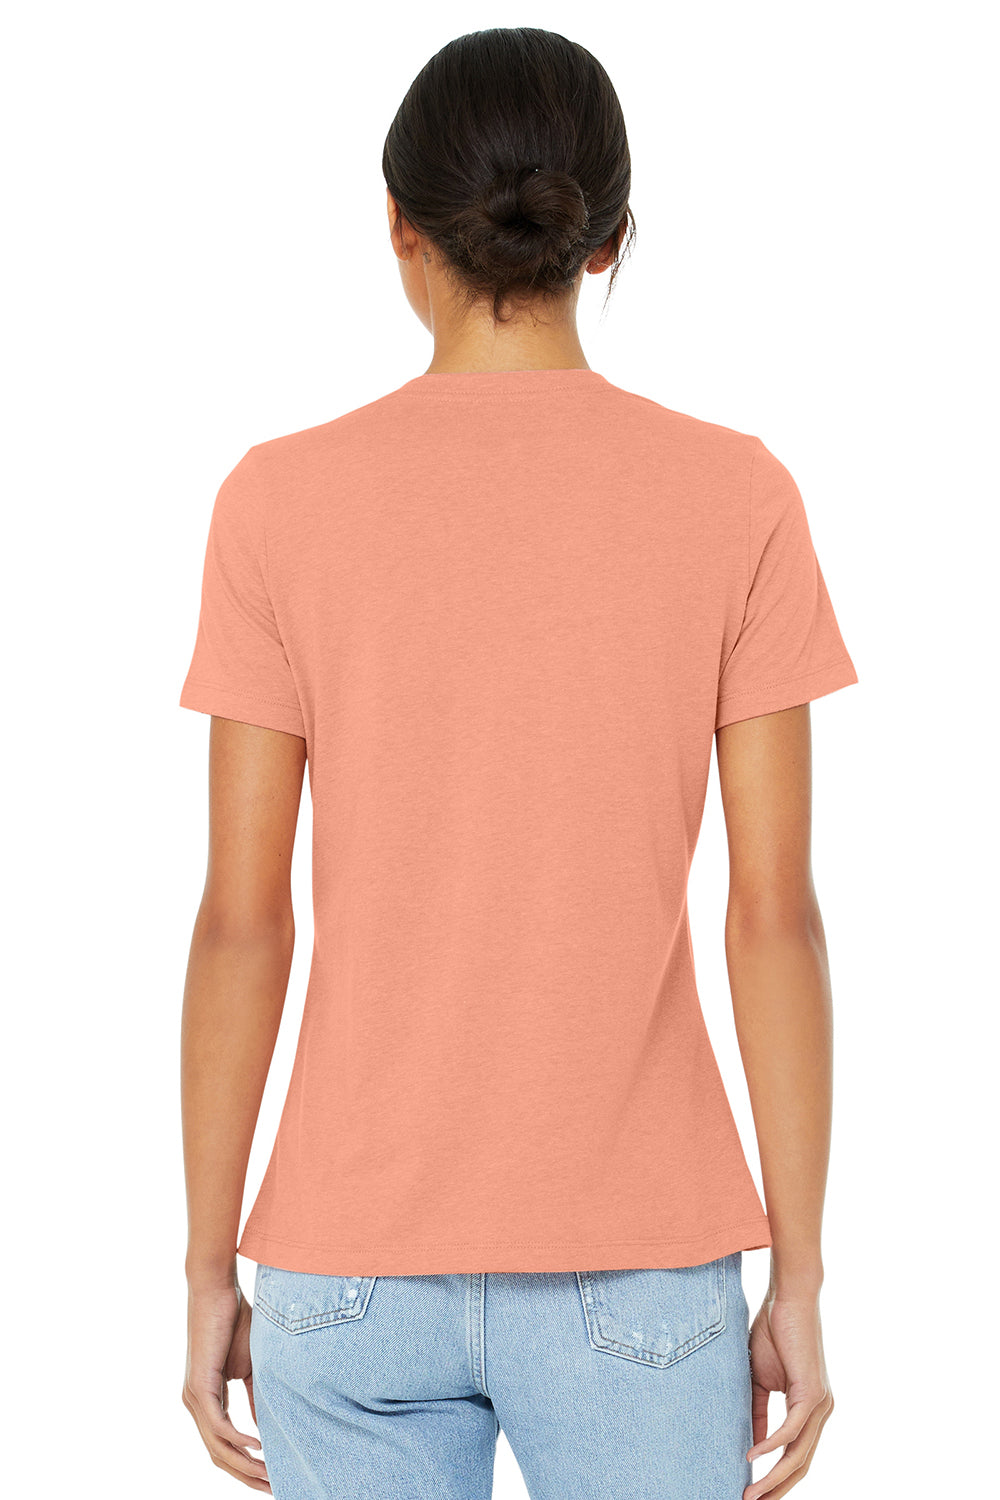 Bella + Canvas BC6413 Womens Short Sleeve Crewneck T-Shirt Sunset Orange Model Back